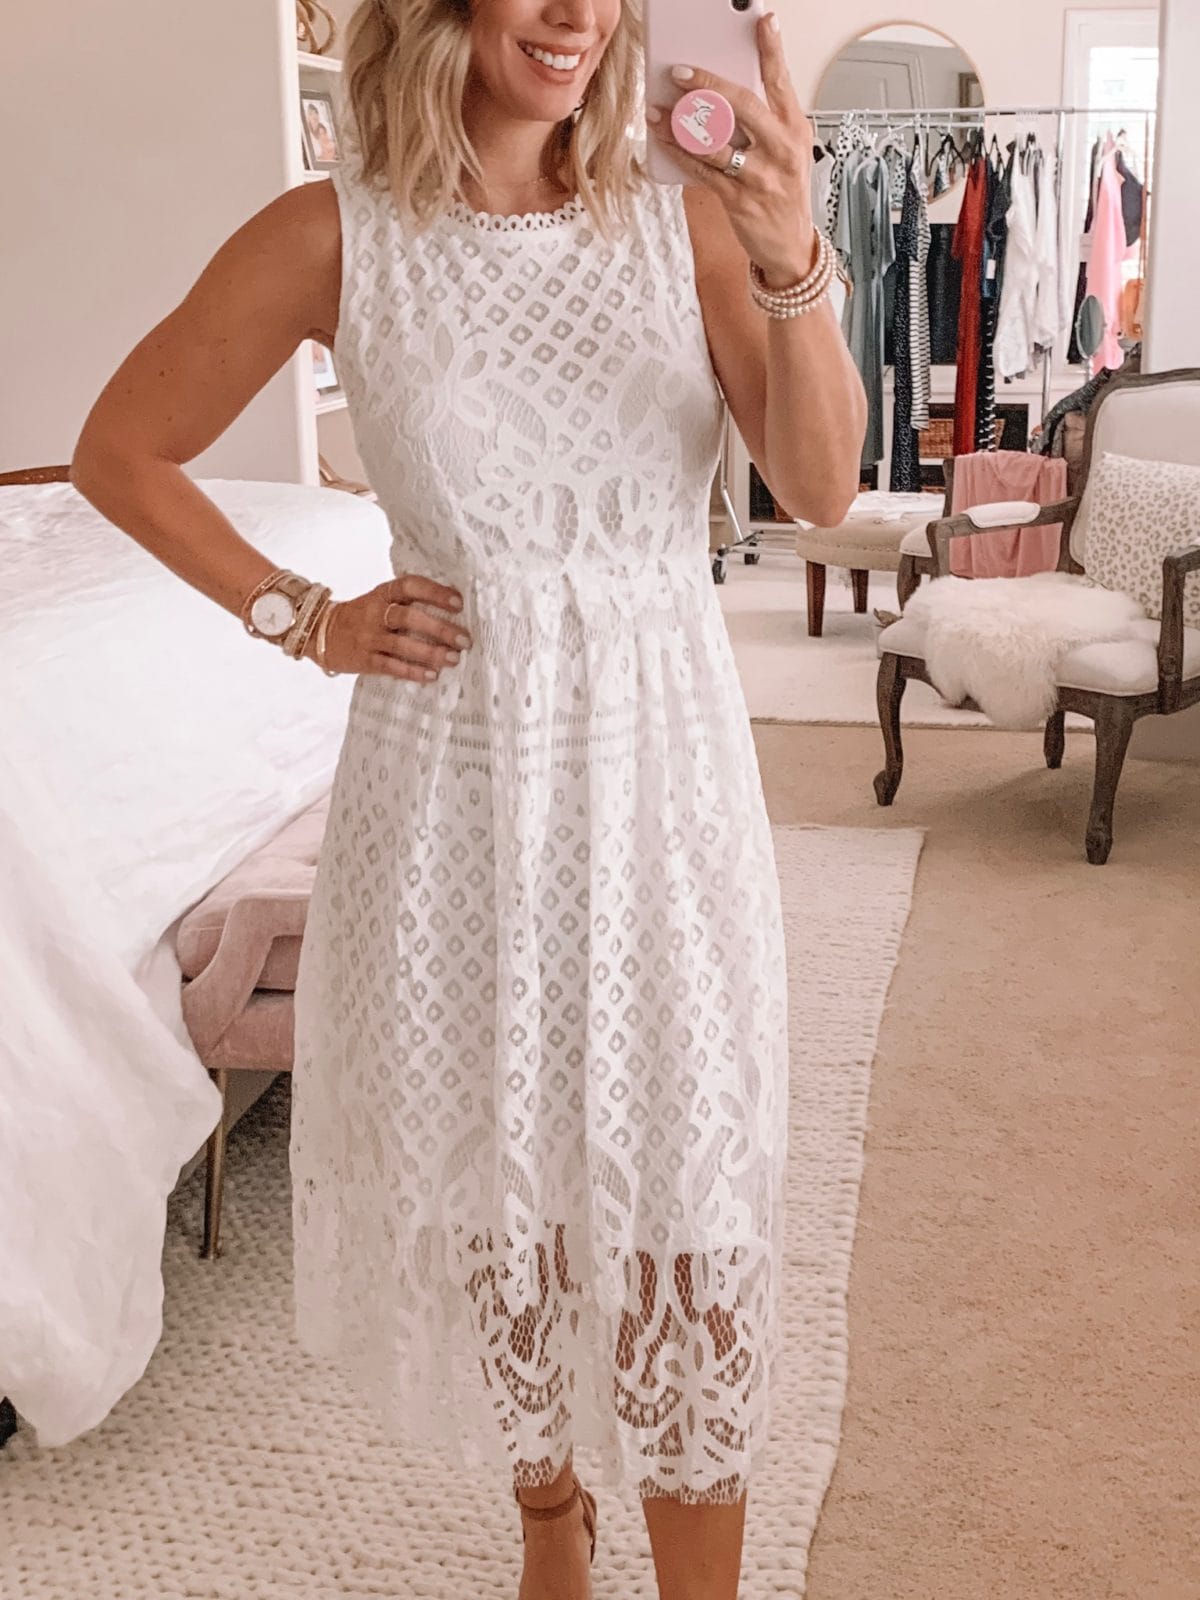 Amazon Fashion Haul - Sleeveless Lace Midi Dress